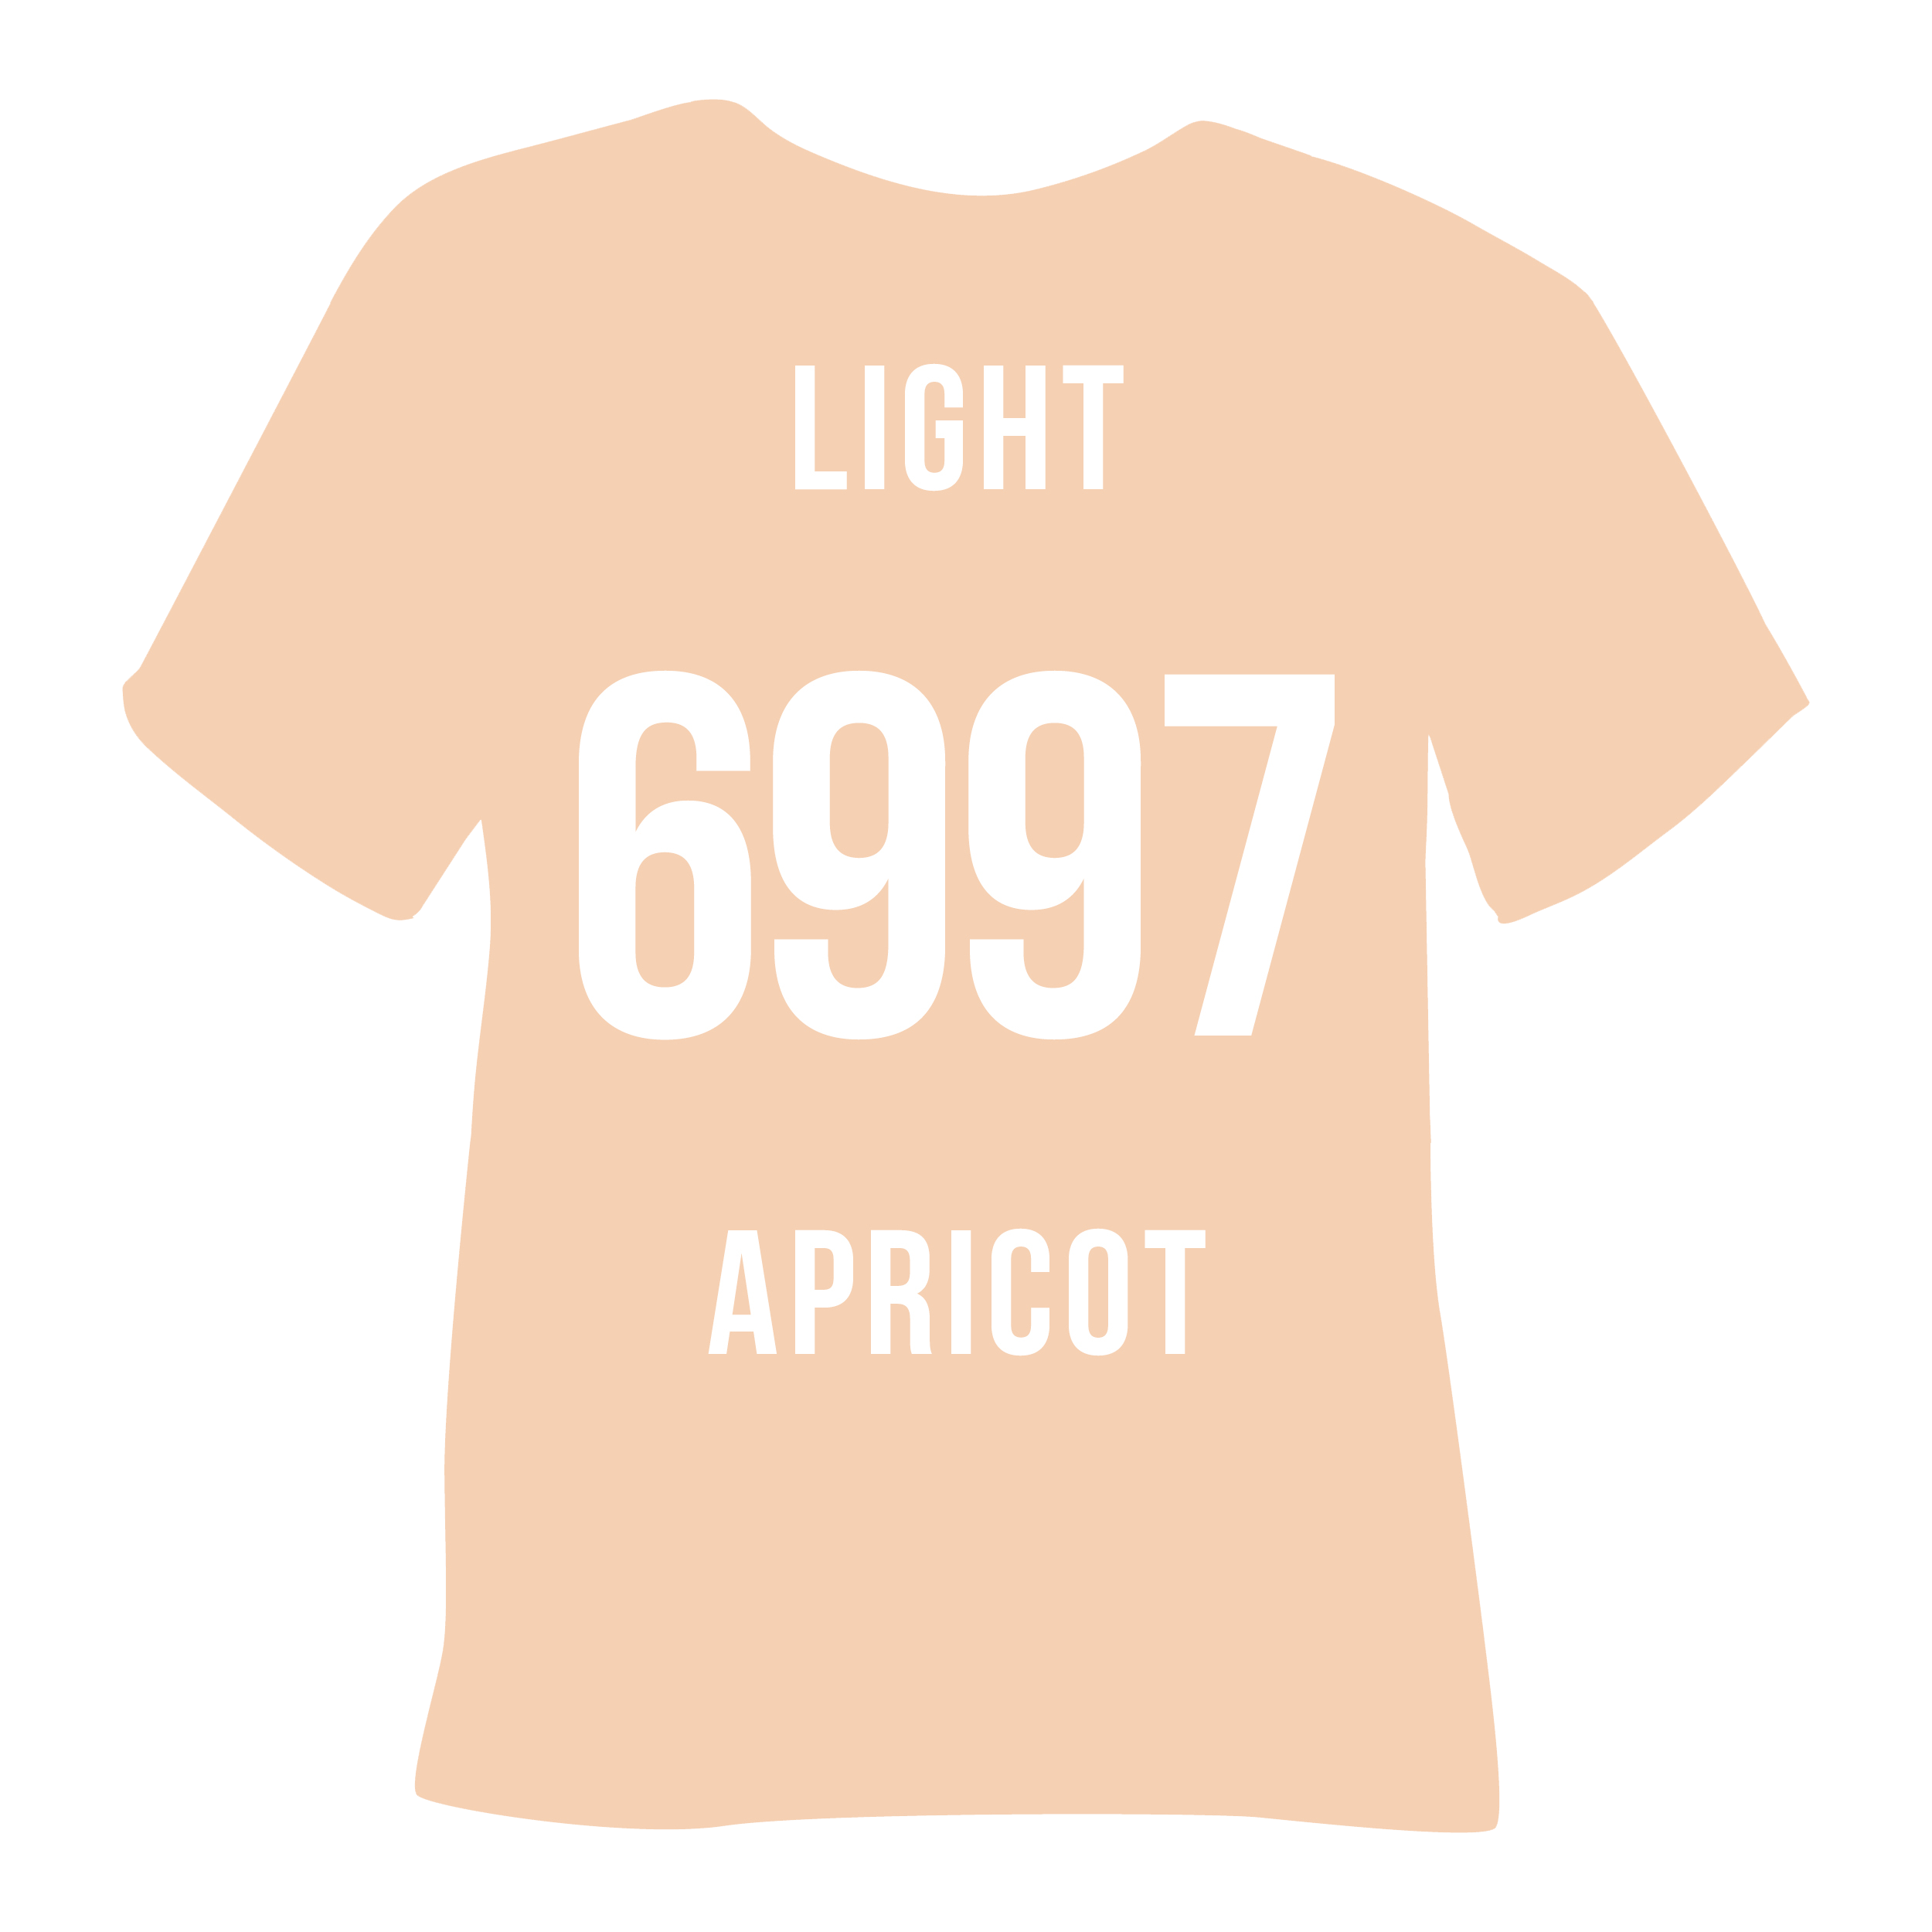 6997 LIGHT APRICOT